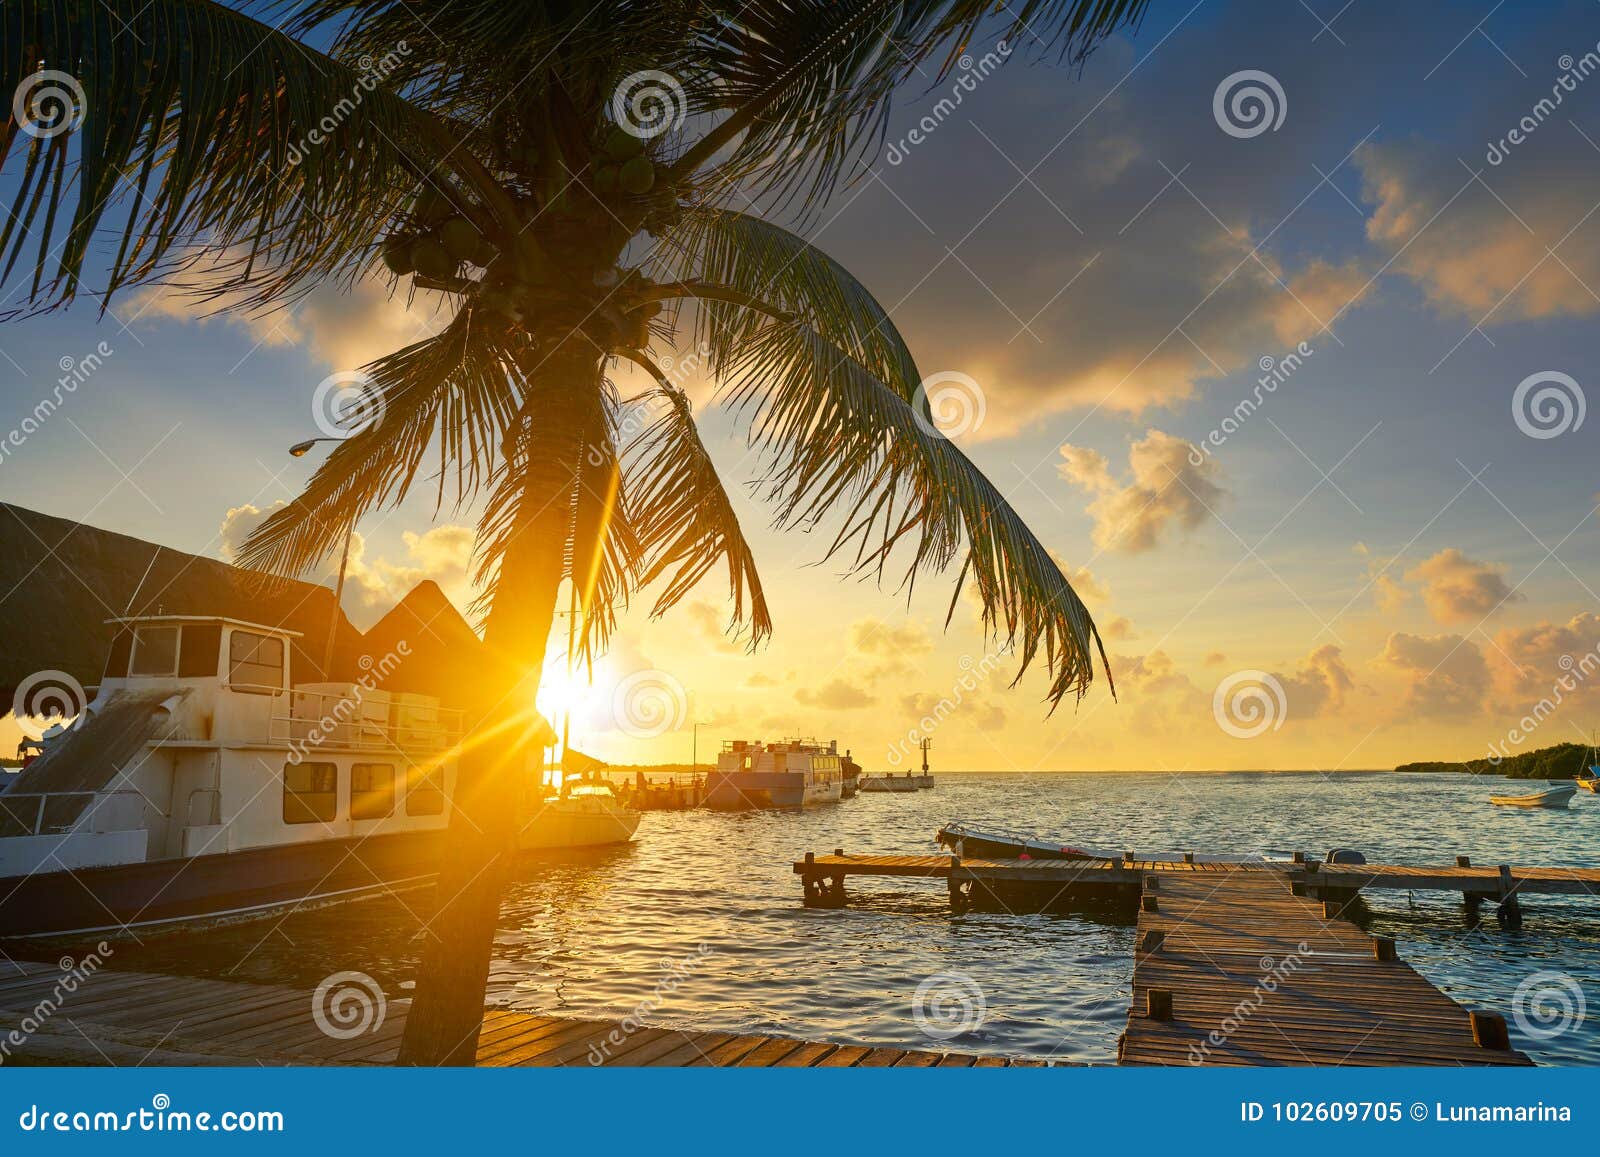 holbox island port sunset in quintana roo